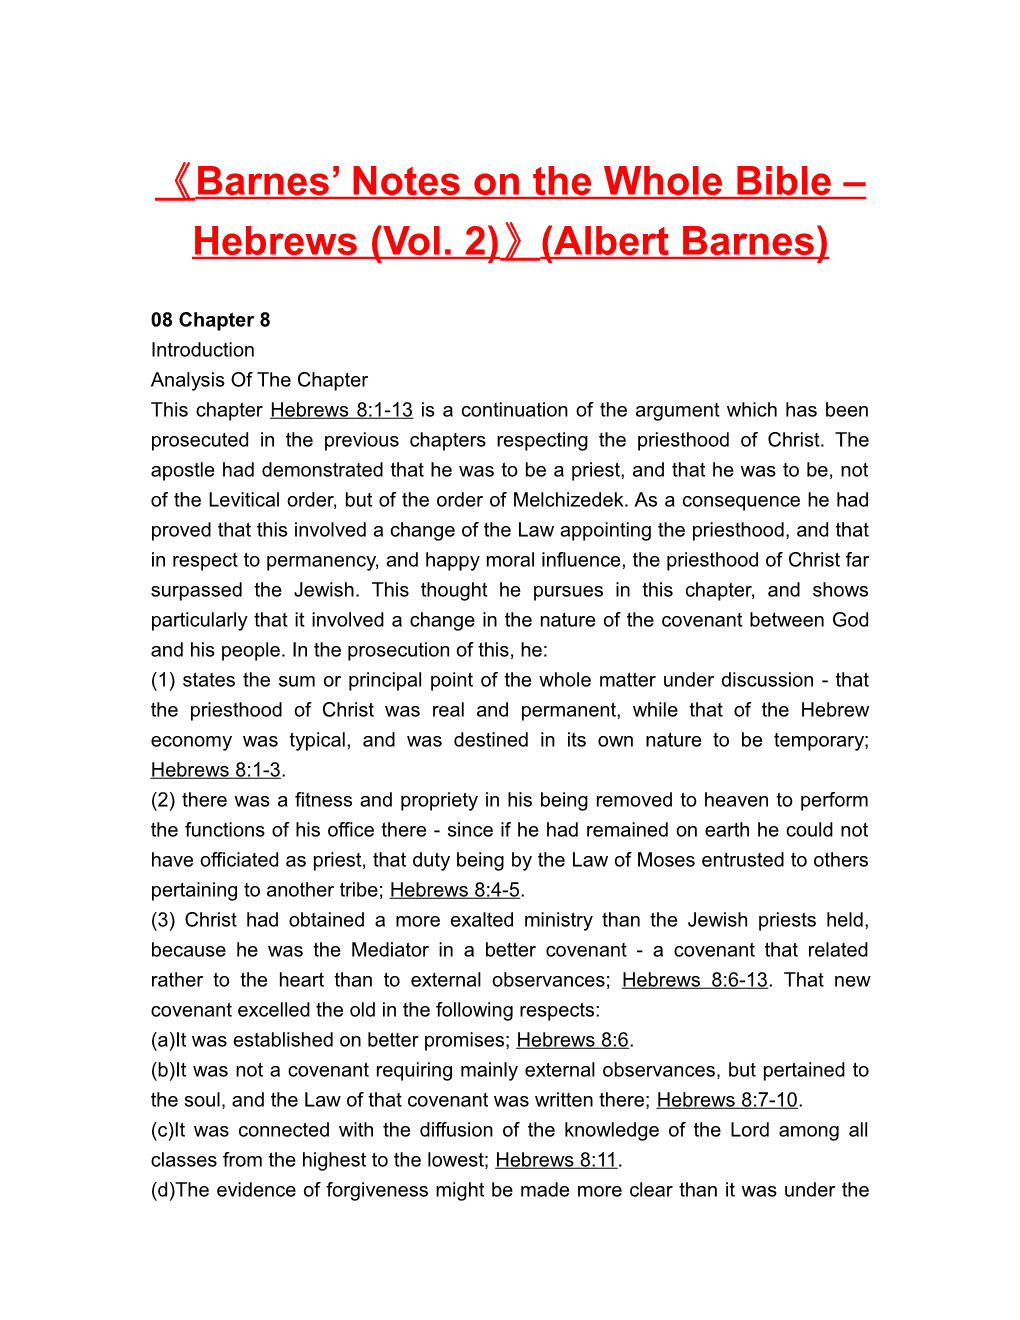 Barnes Notes on the Whole Bible Hebrews (Vol. 2) (Albert Barnes)